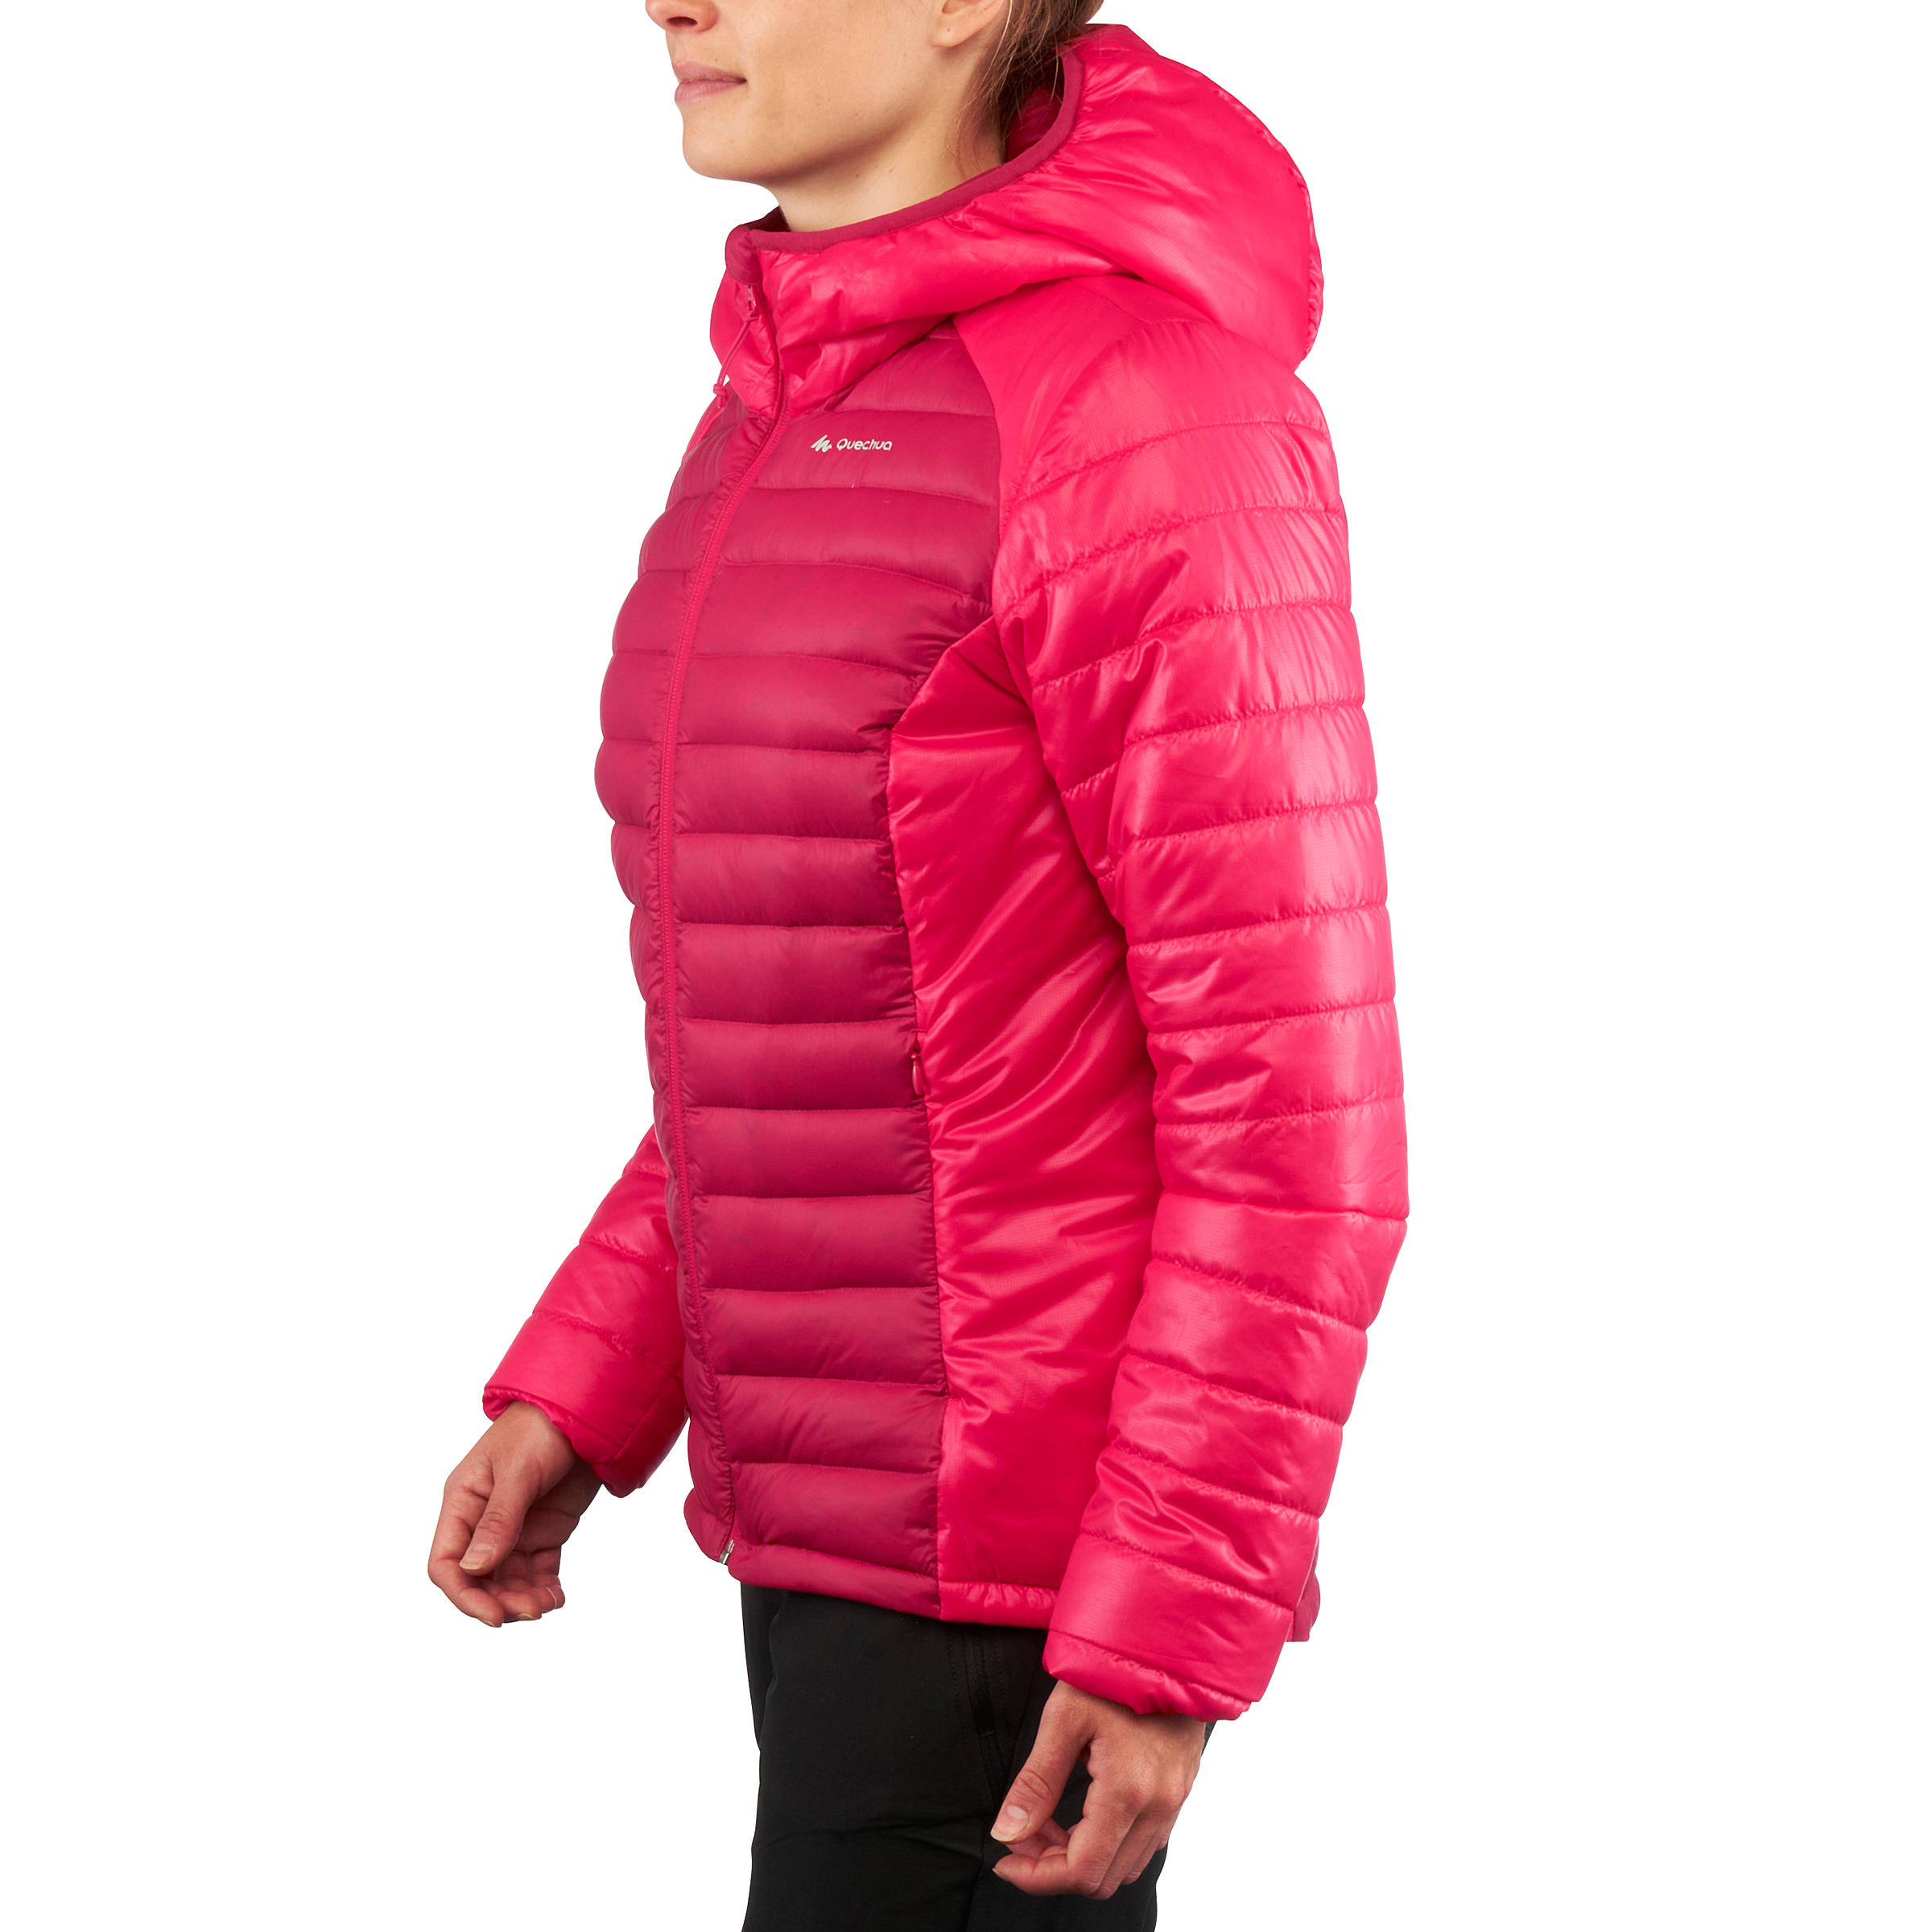 X-Light 1 Woman's Padded Hiking Jacket - Pink 16/17